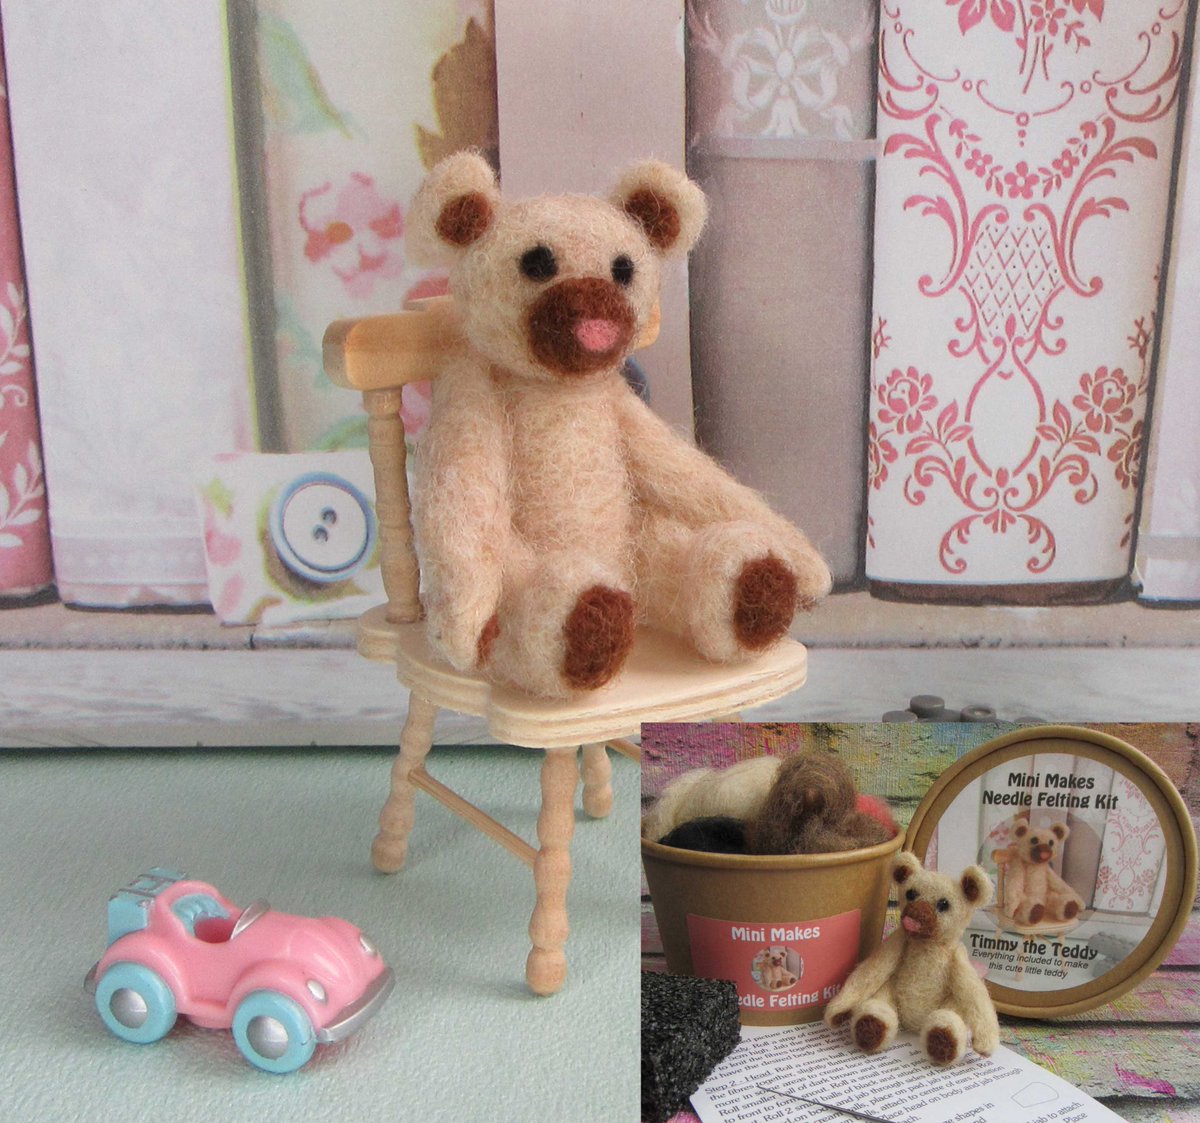 Timmy Teddy, so cute, he could be yours!
#craft #craftkit #crafting #needlefeltingartist #needlefelting #art #teddybear #teddy #cute #etsyshop #etsy #krasnayacrafts #earlybiz